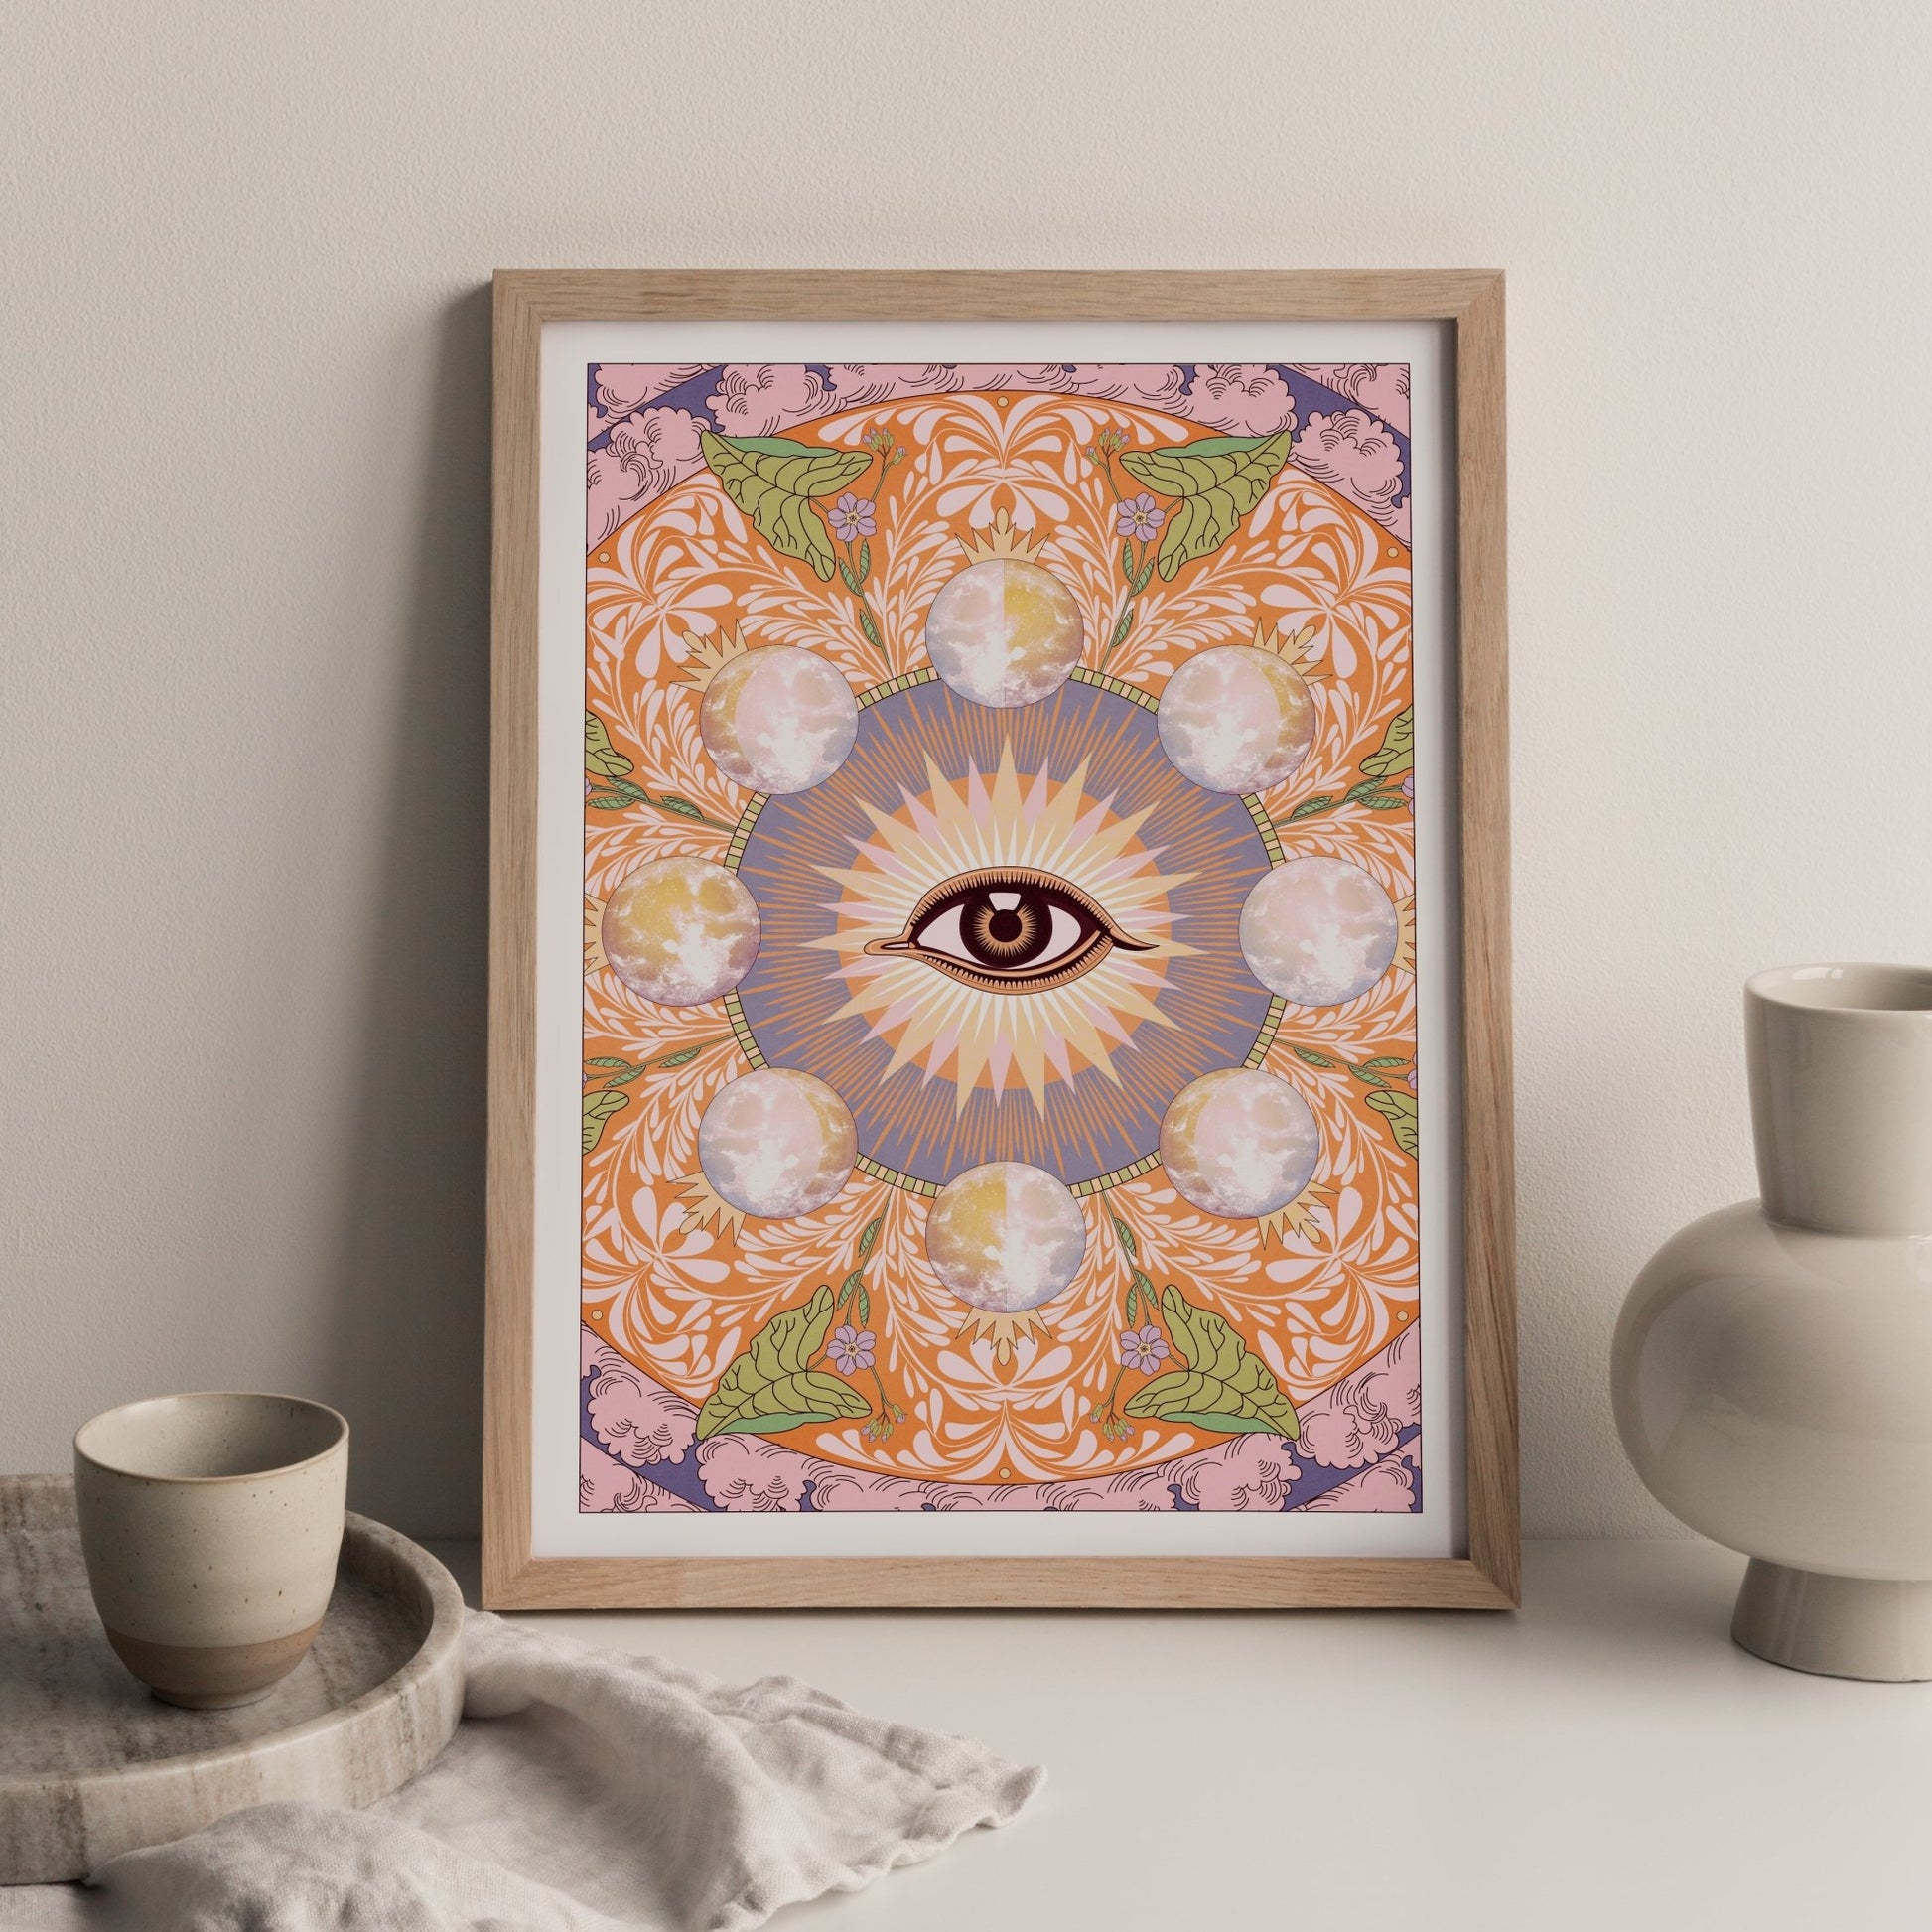 'Starry Eyed' Art Print - OMG KITTY